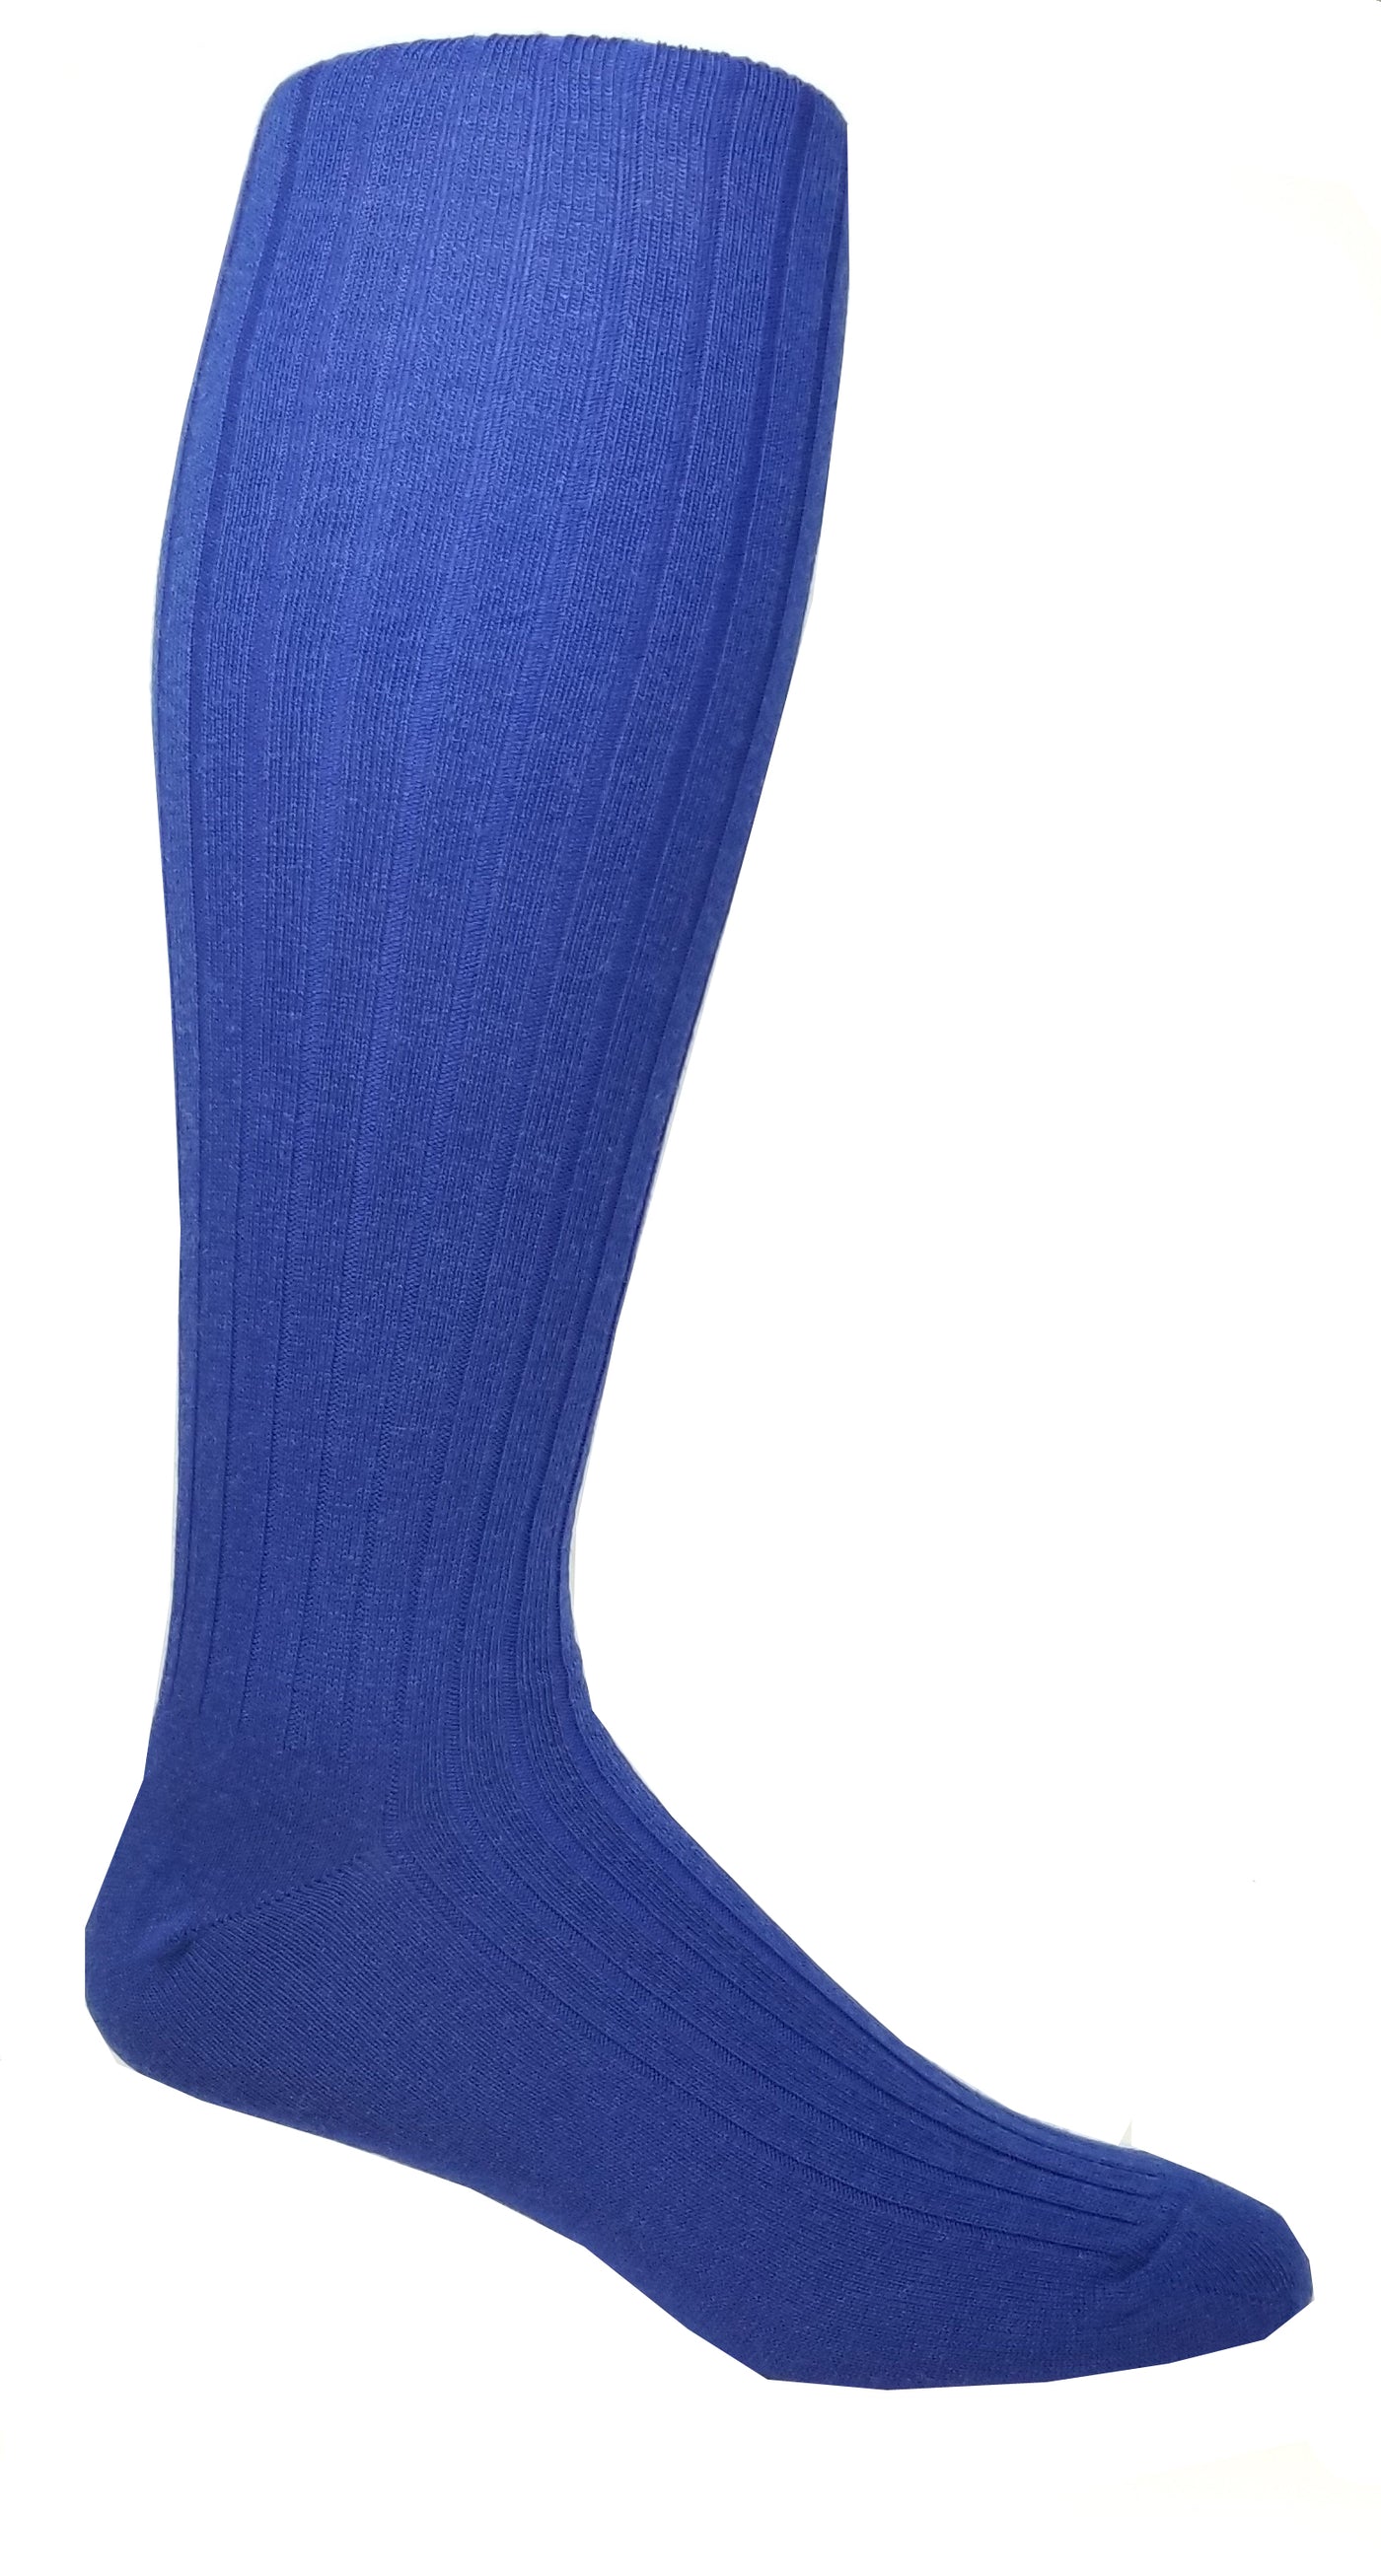 Vagden Men's Bermuda Mercerized Cotton Knee High Socks (3 PAIRS)